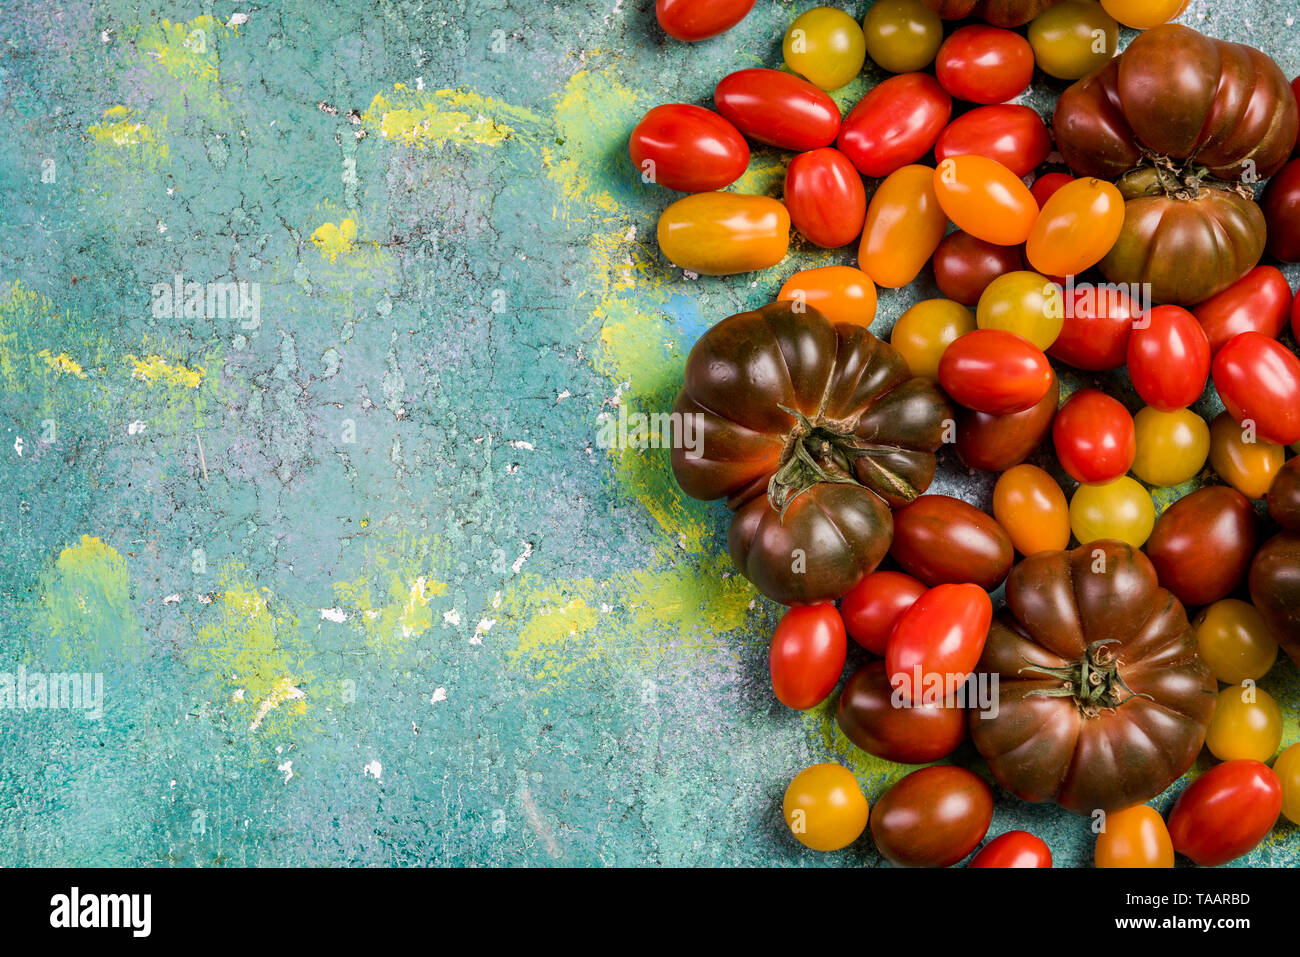 Market fresh raw colorful tomatoes. Stock Photo